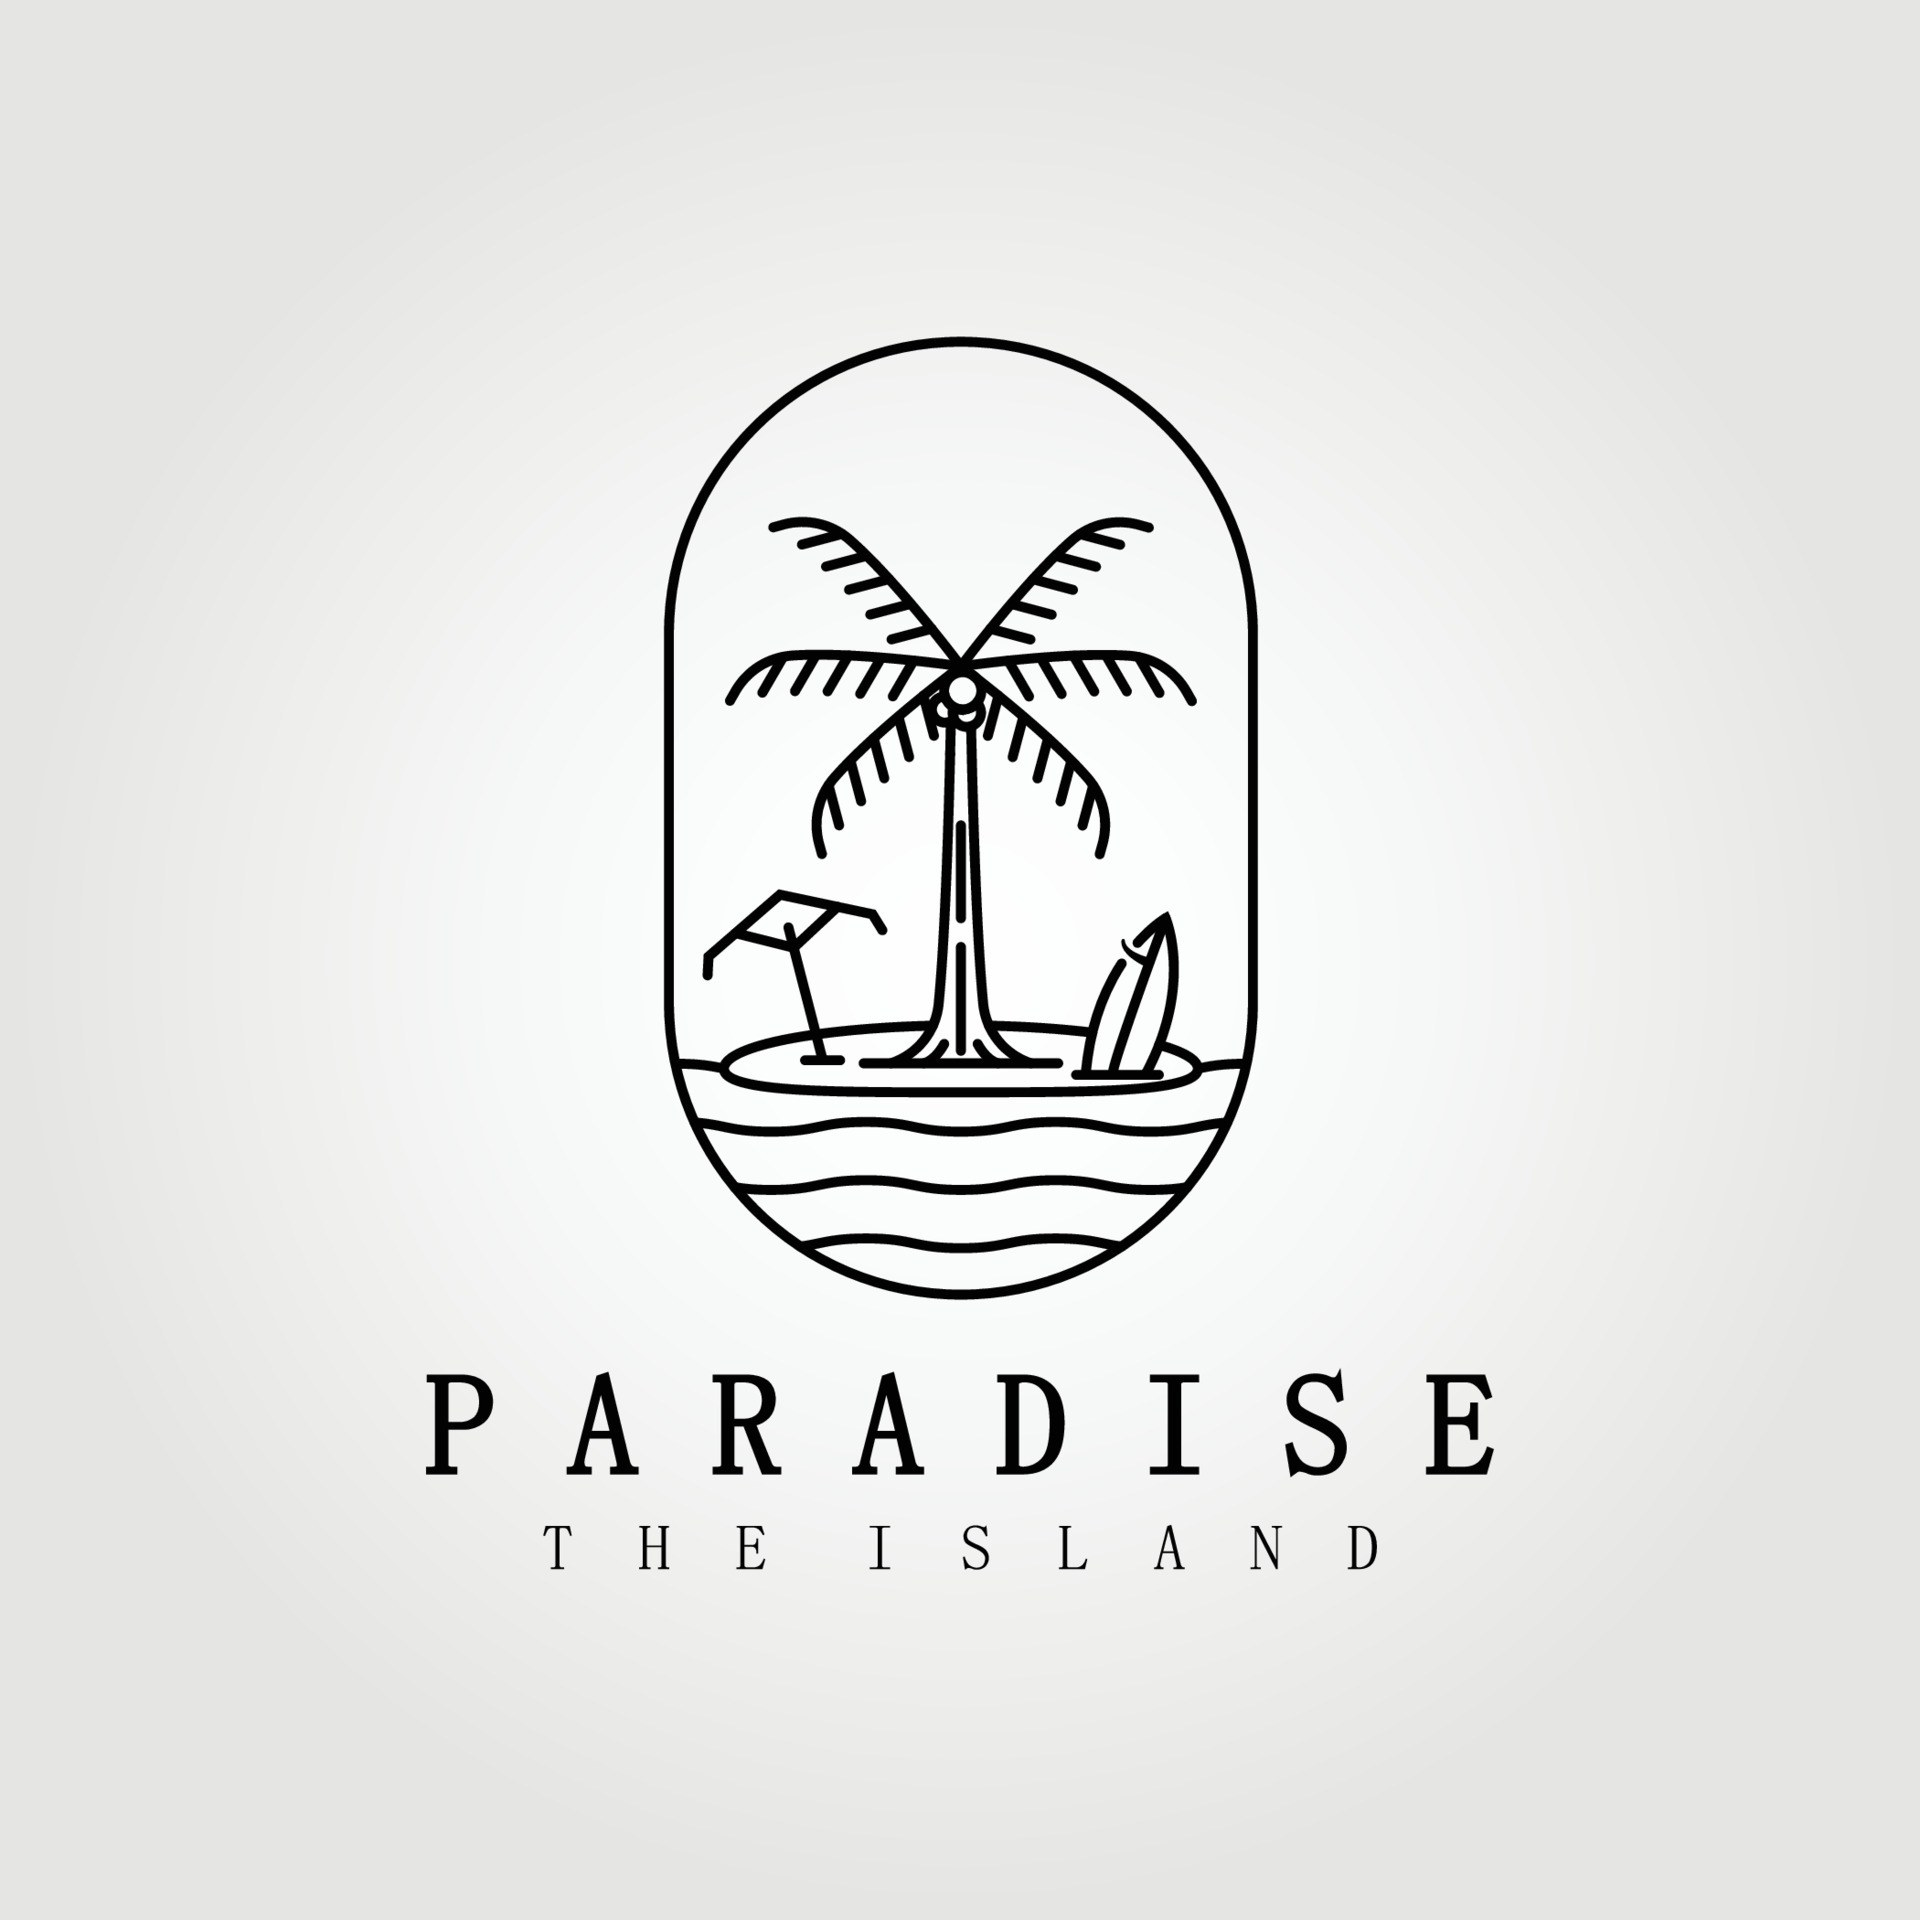 paradise , hawaii , line art palm tree logo vector illustration design ...